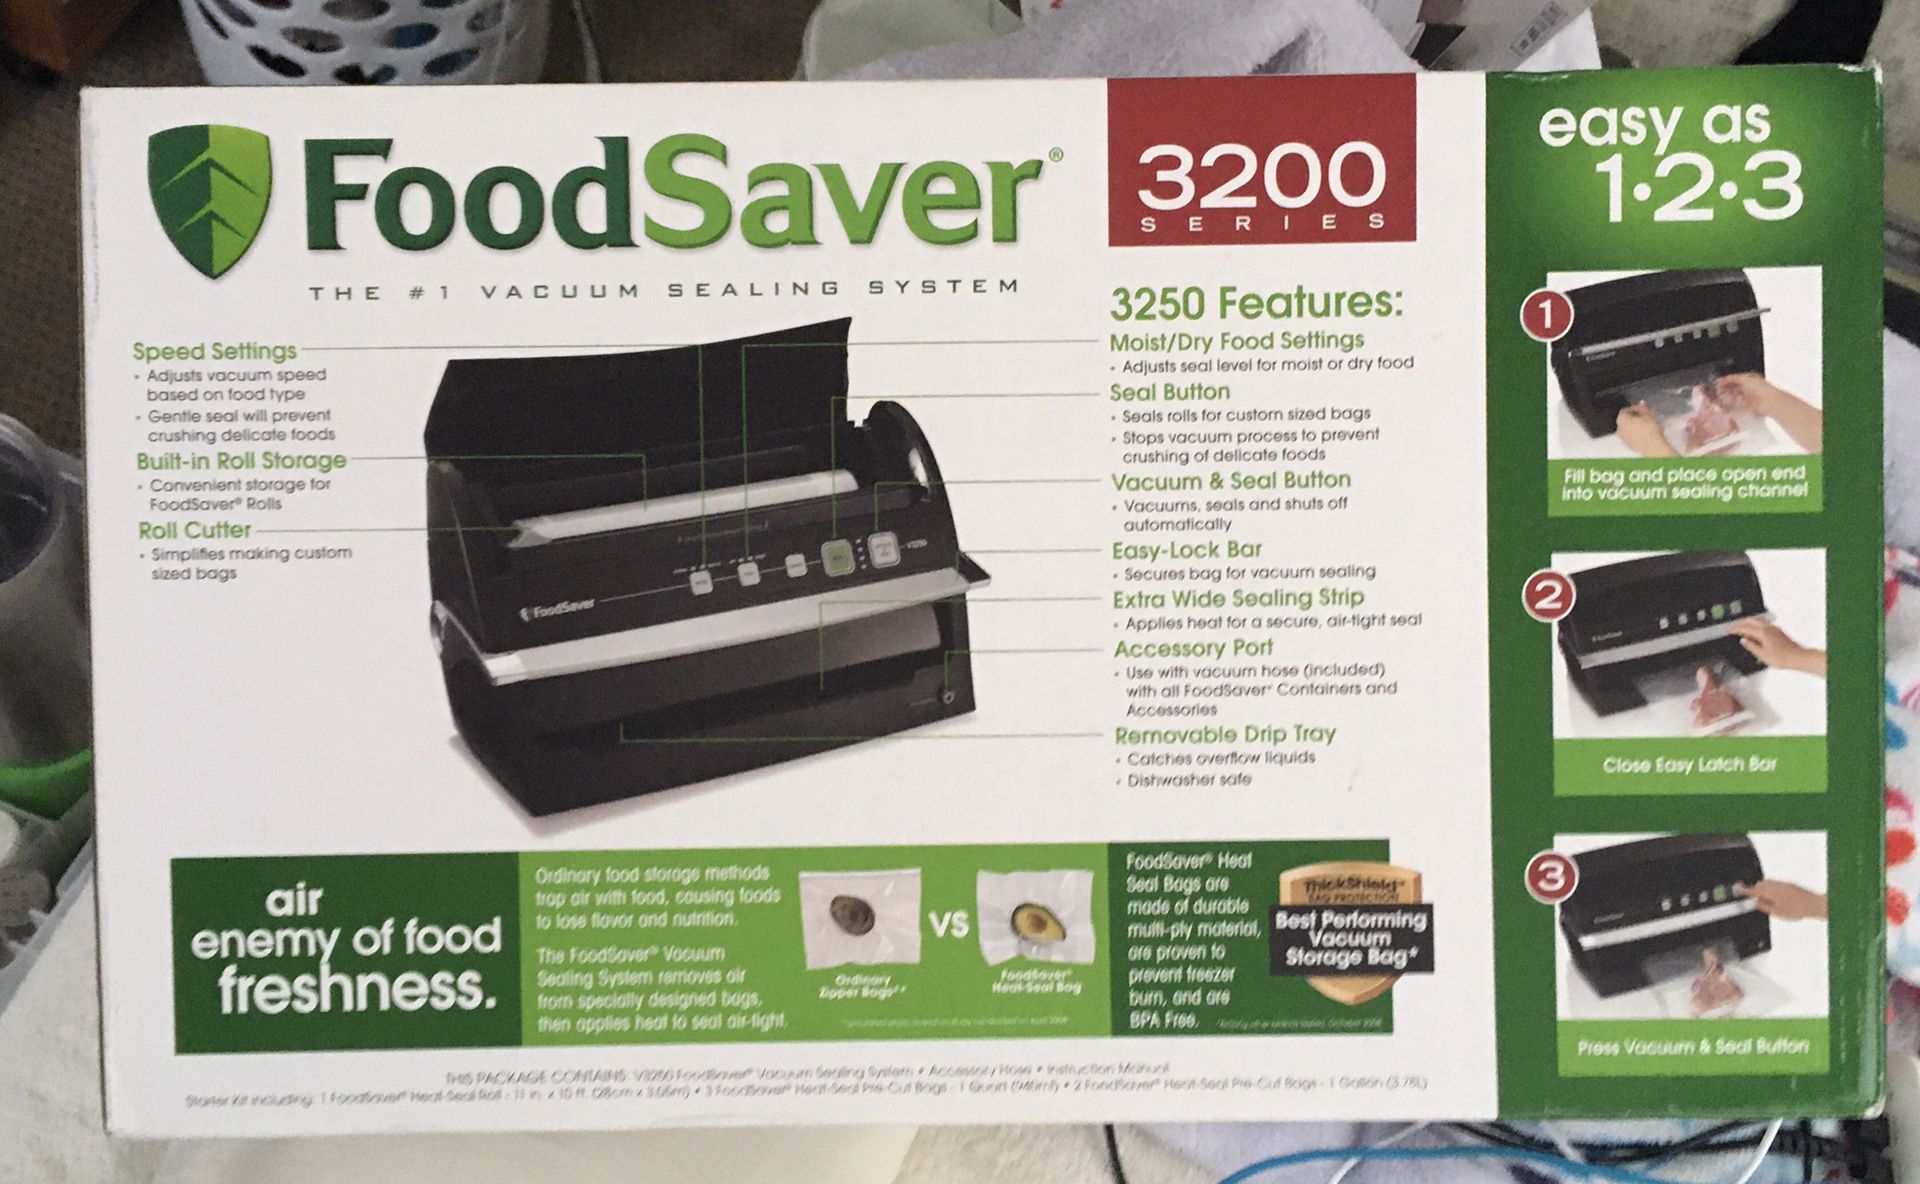 NIB FoodSaver Vacuum Food Sealer - version 3250